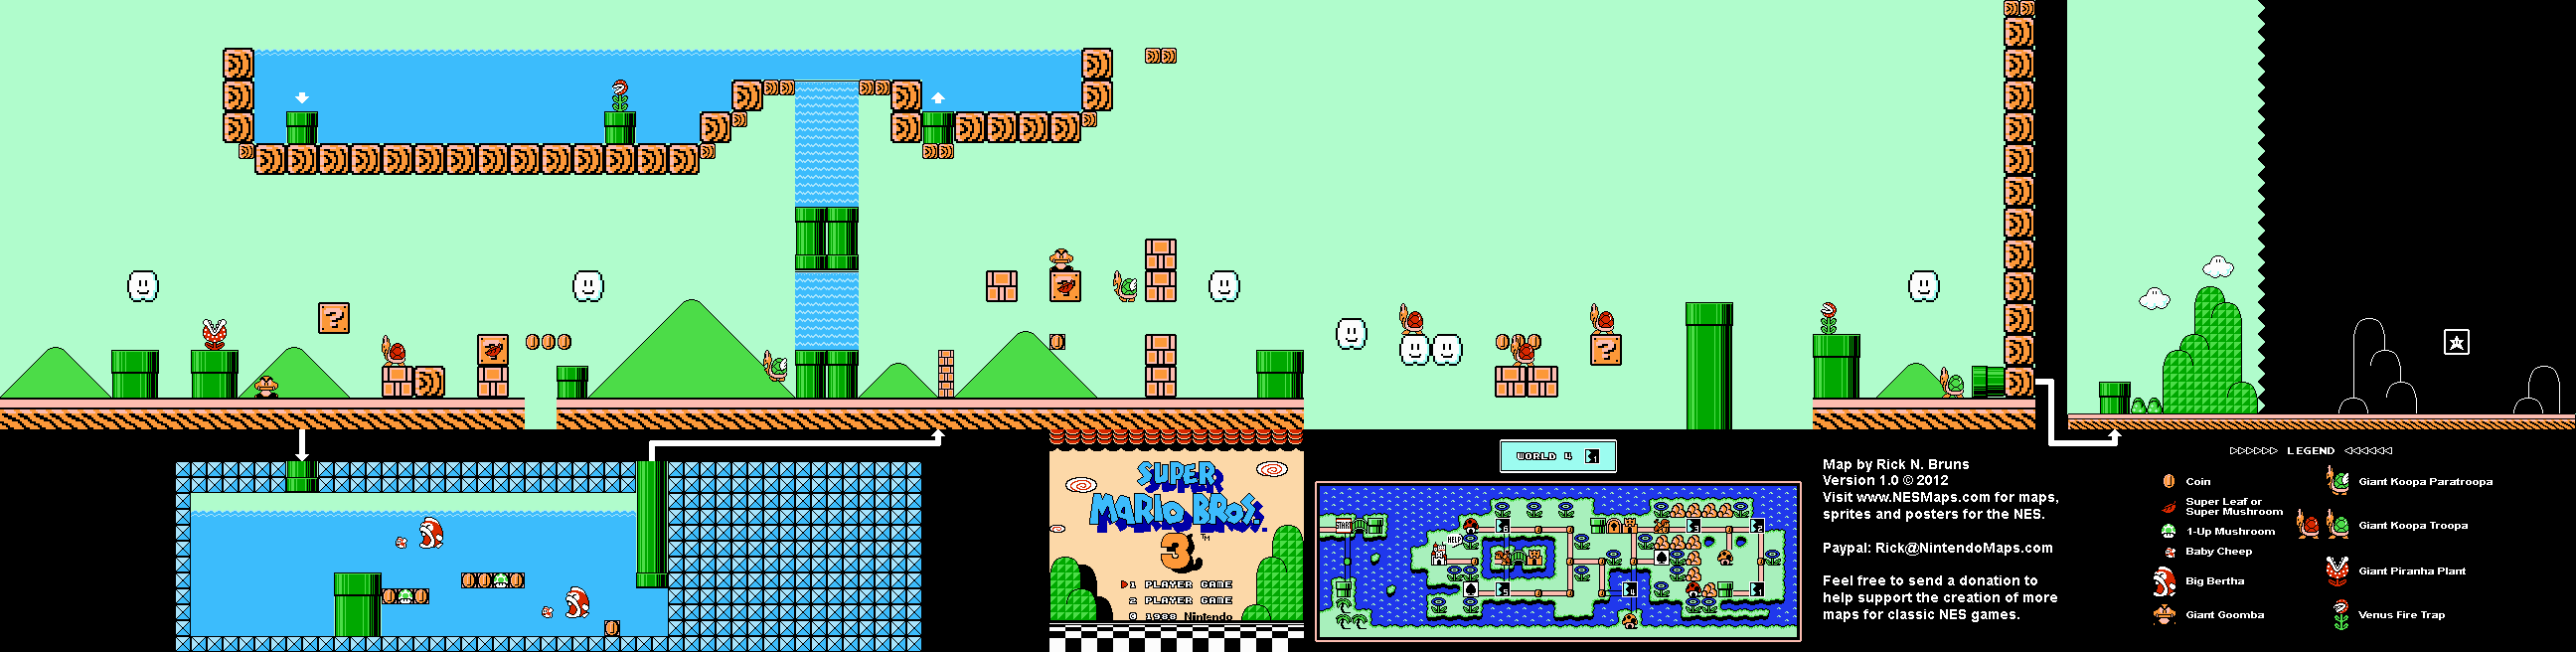 Super Mario Brothers 3 - World 4-1 Nintendo NES Map